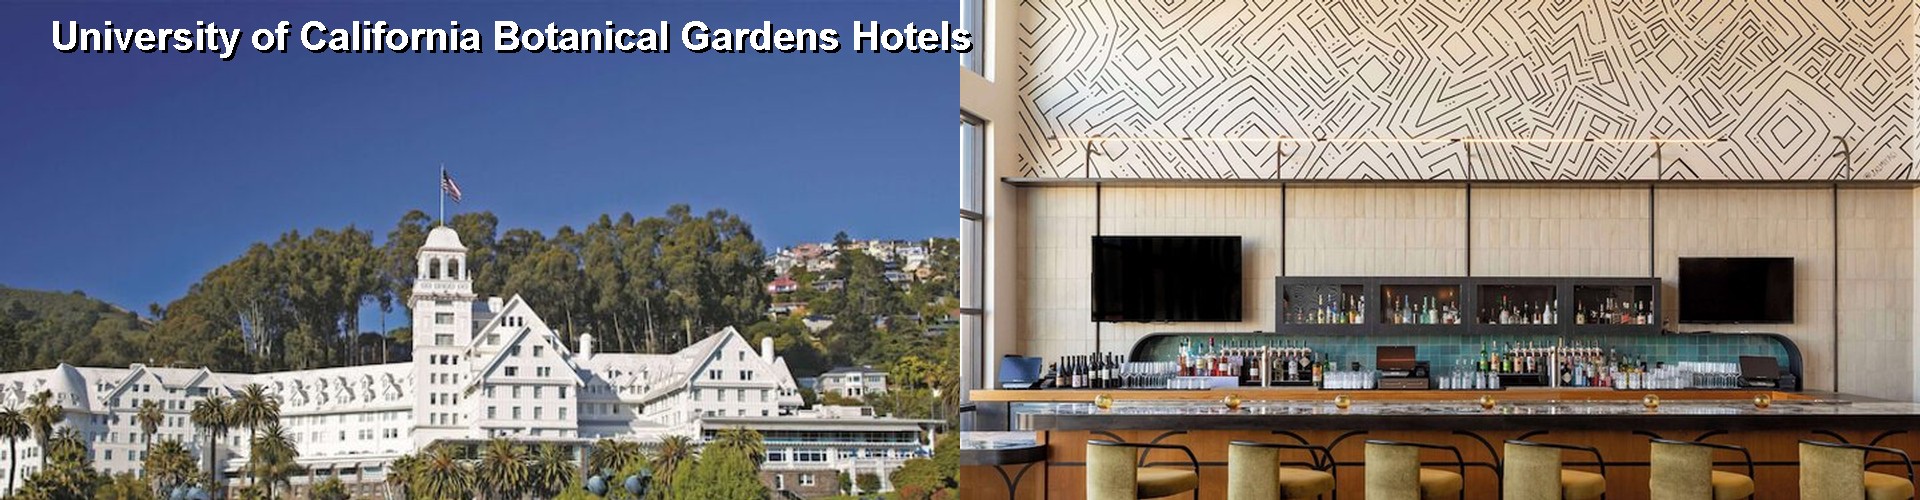 2 Best Hotels near University of California Botanical Gardens